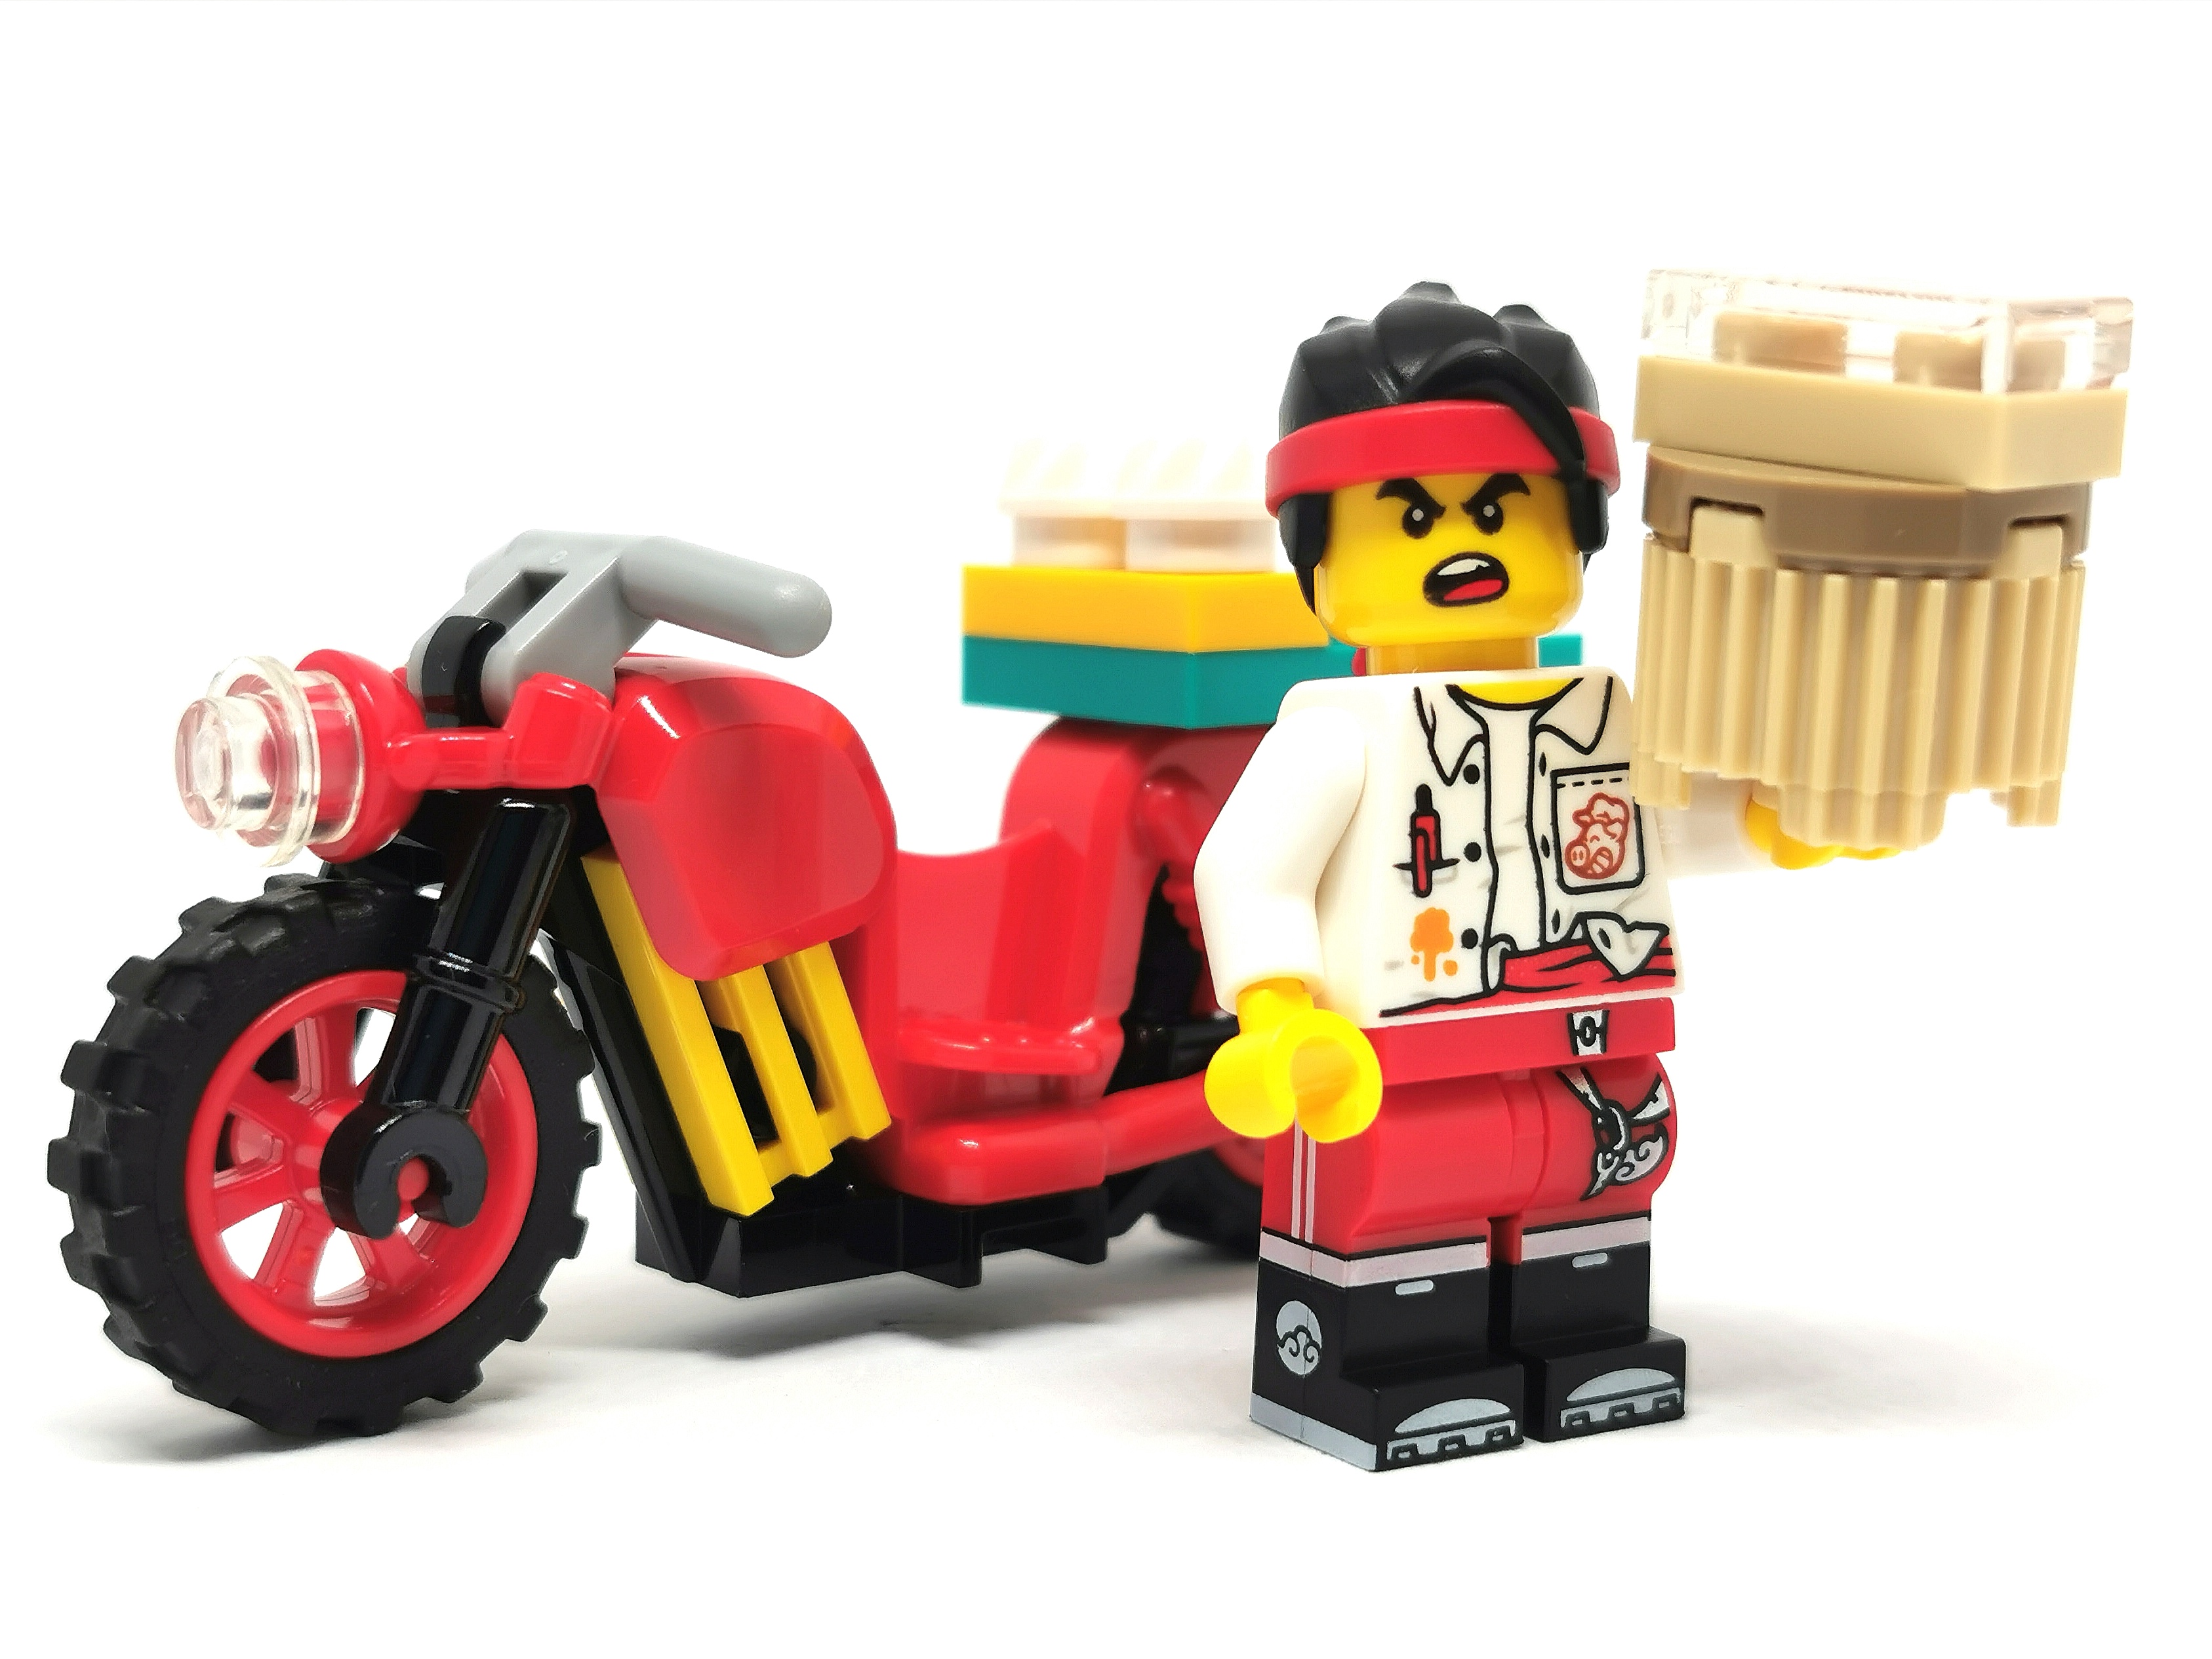 Delivery Bike Polybag Minifigure on Bike New LEGO 30341 Monkie Kid